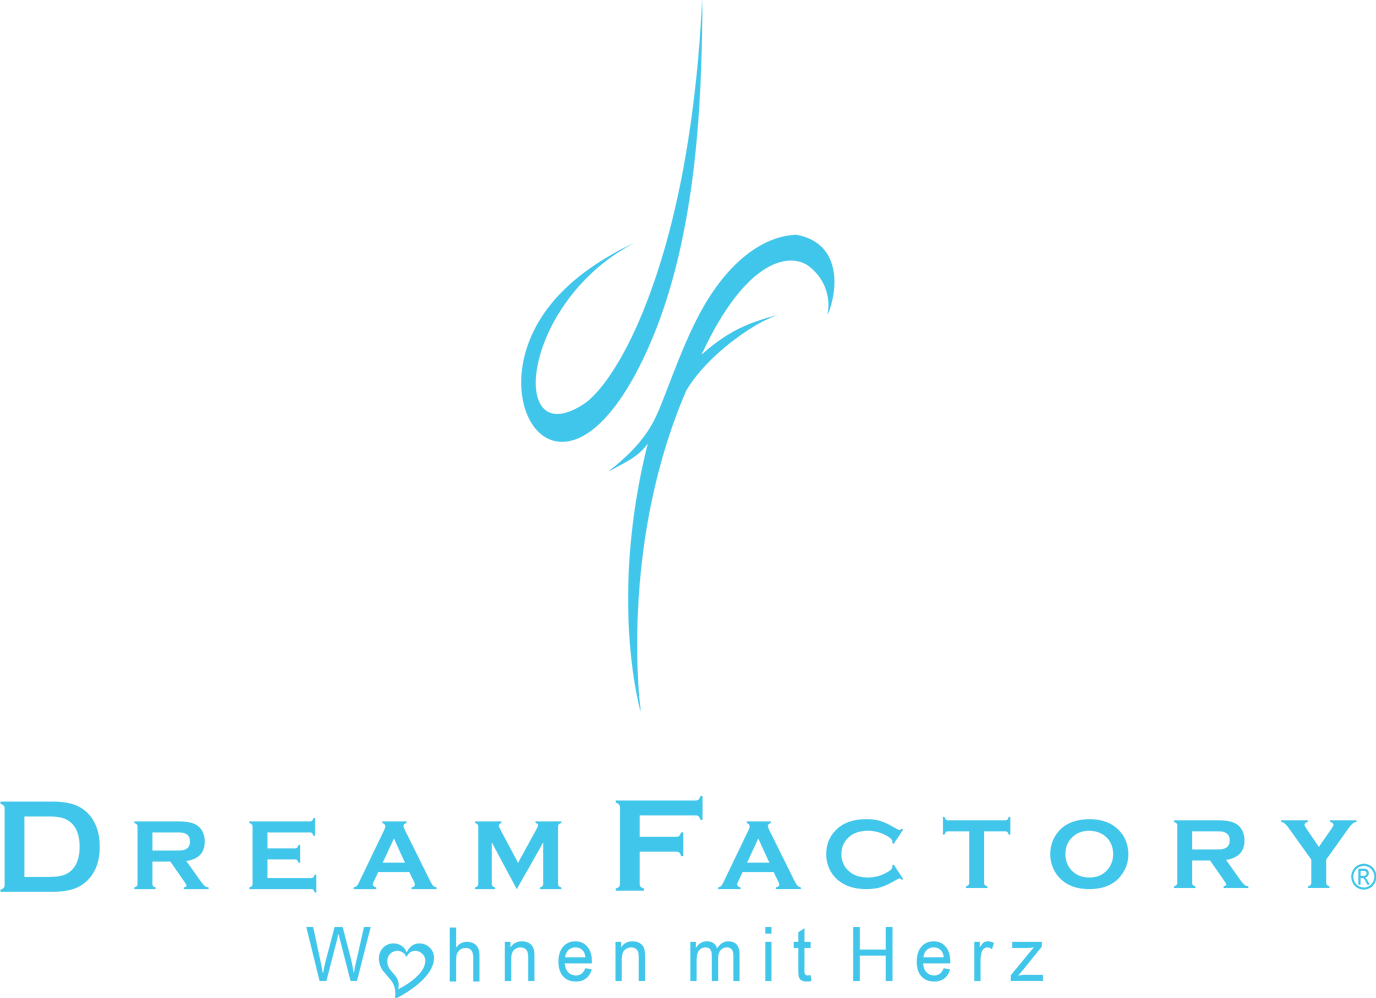 



Dreamfactory Liegenschaftsentwicklung GmbH

